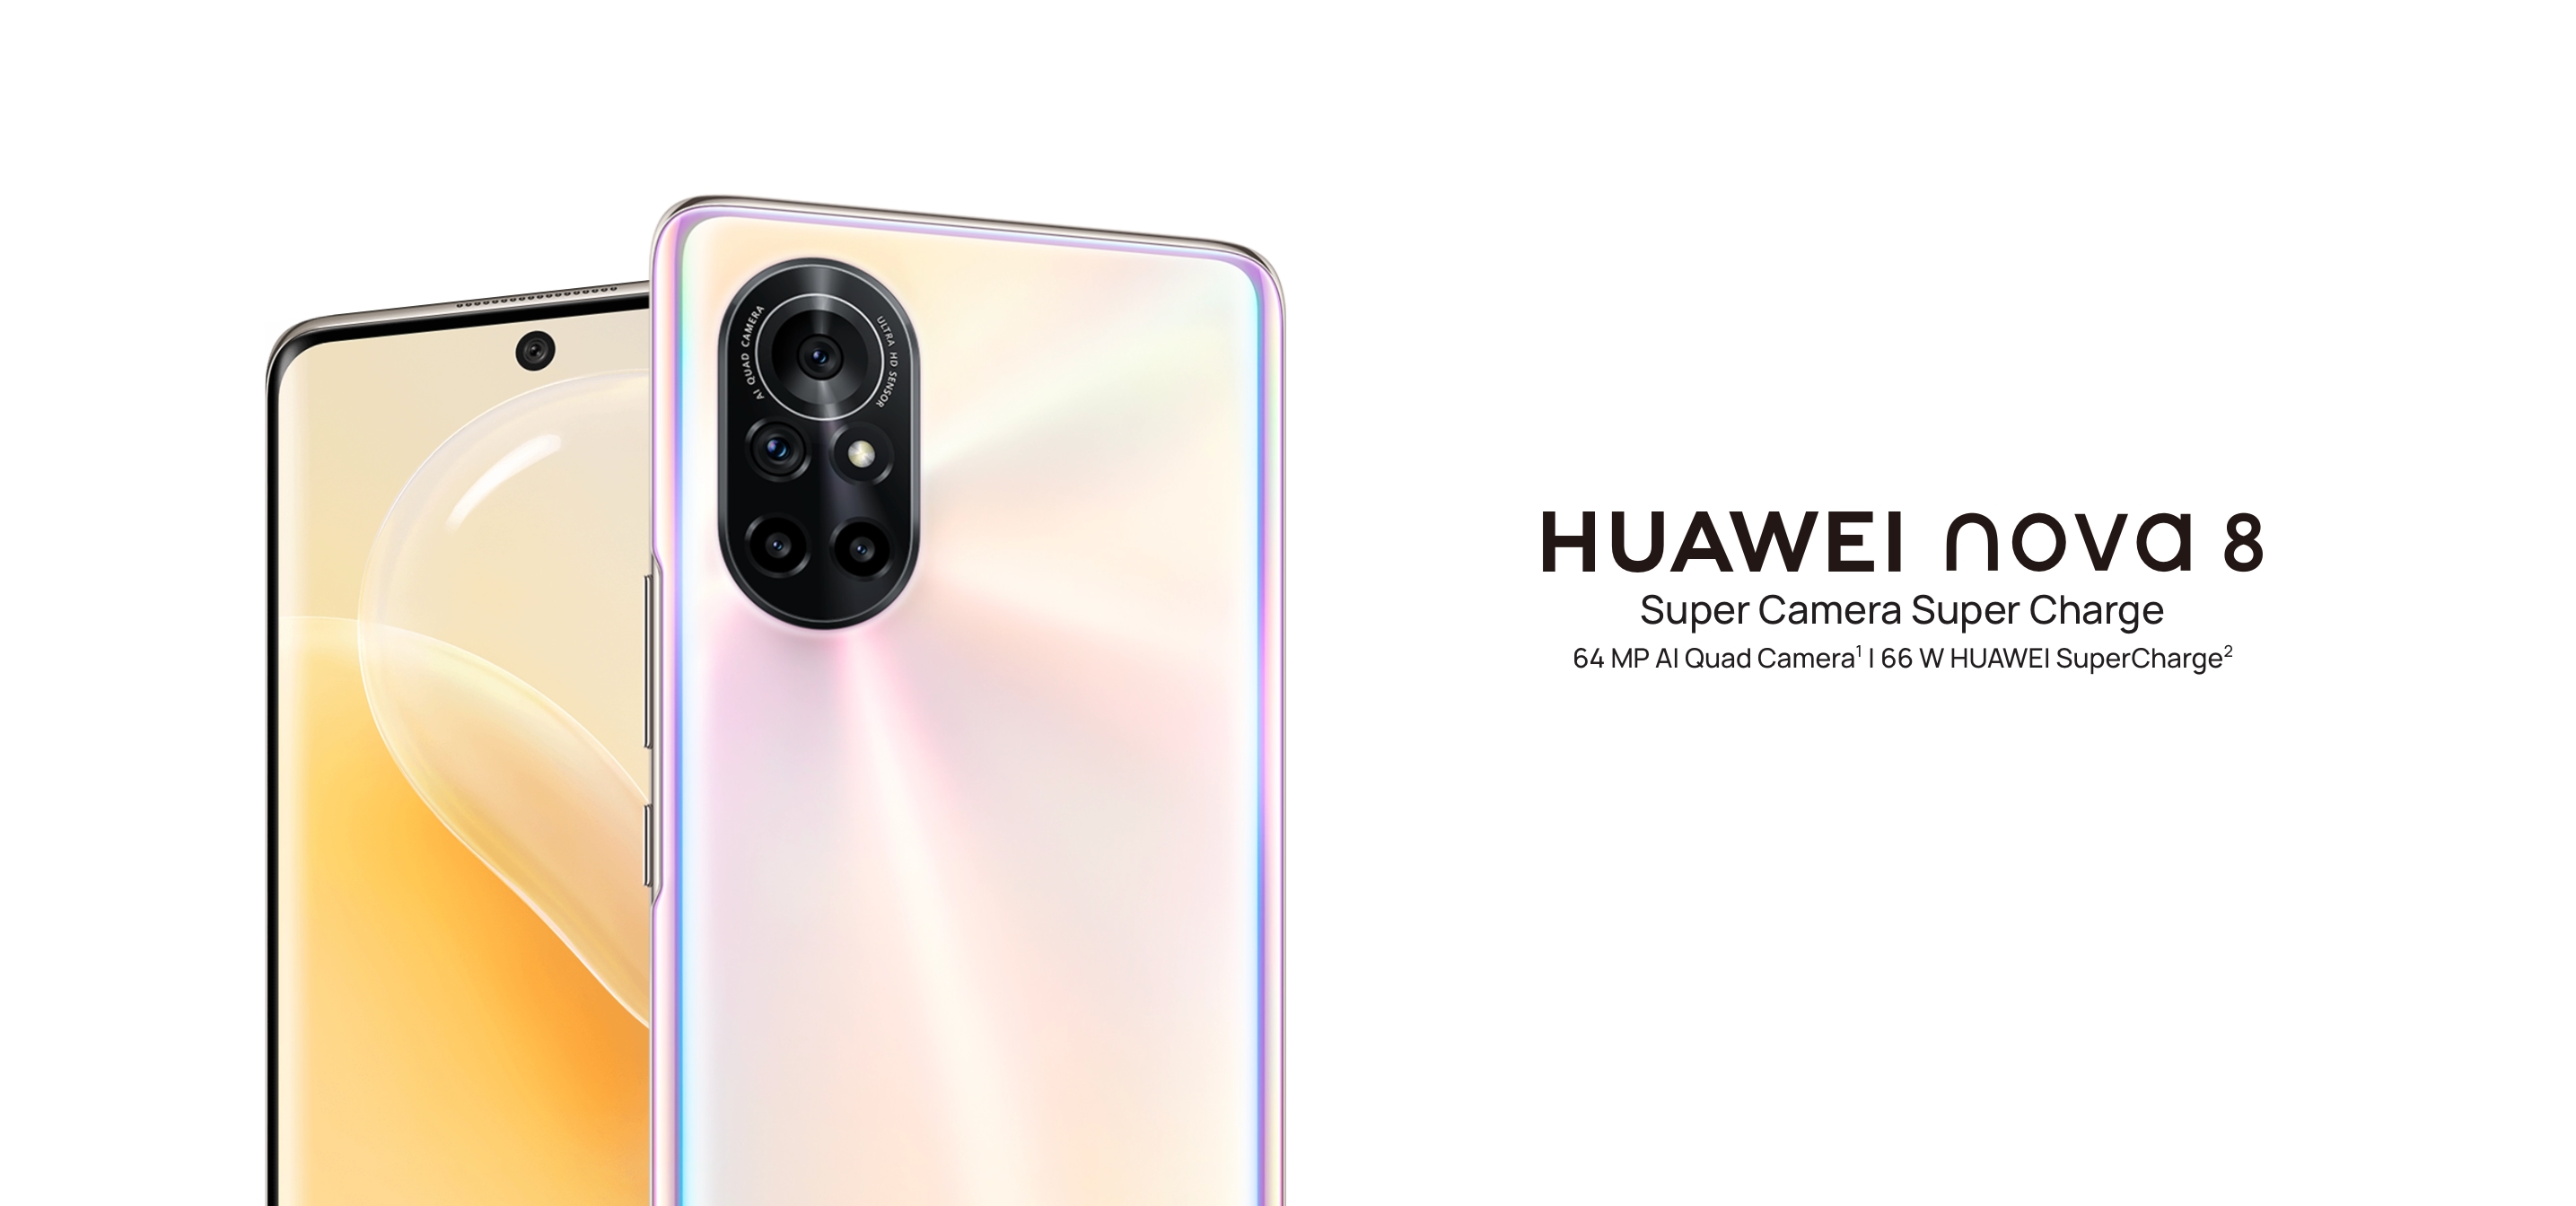 Huawei Nova 8 became the company's first smartphone to get EMUI 12 shell